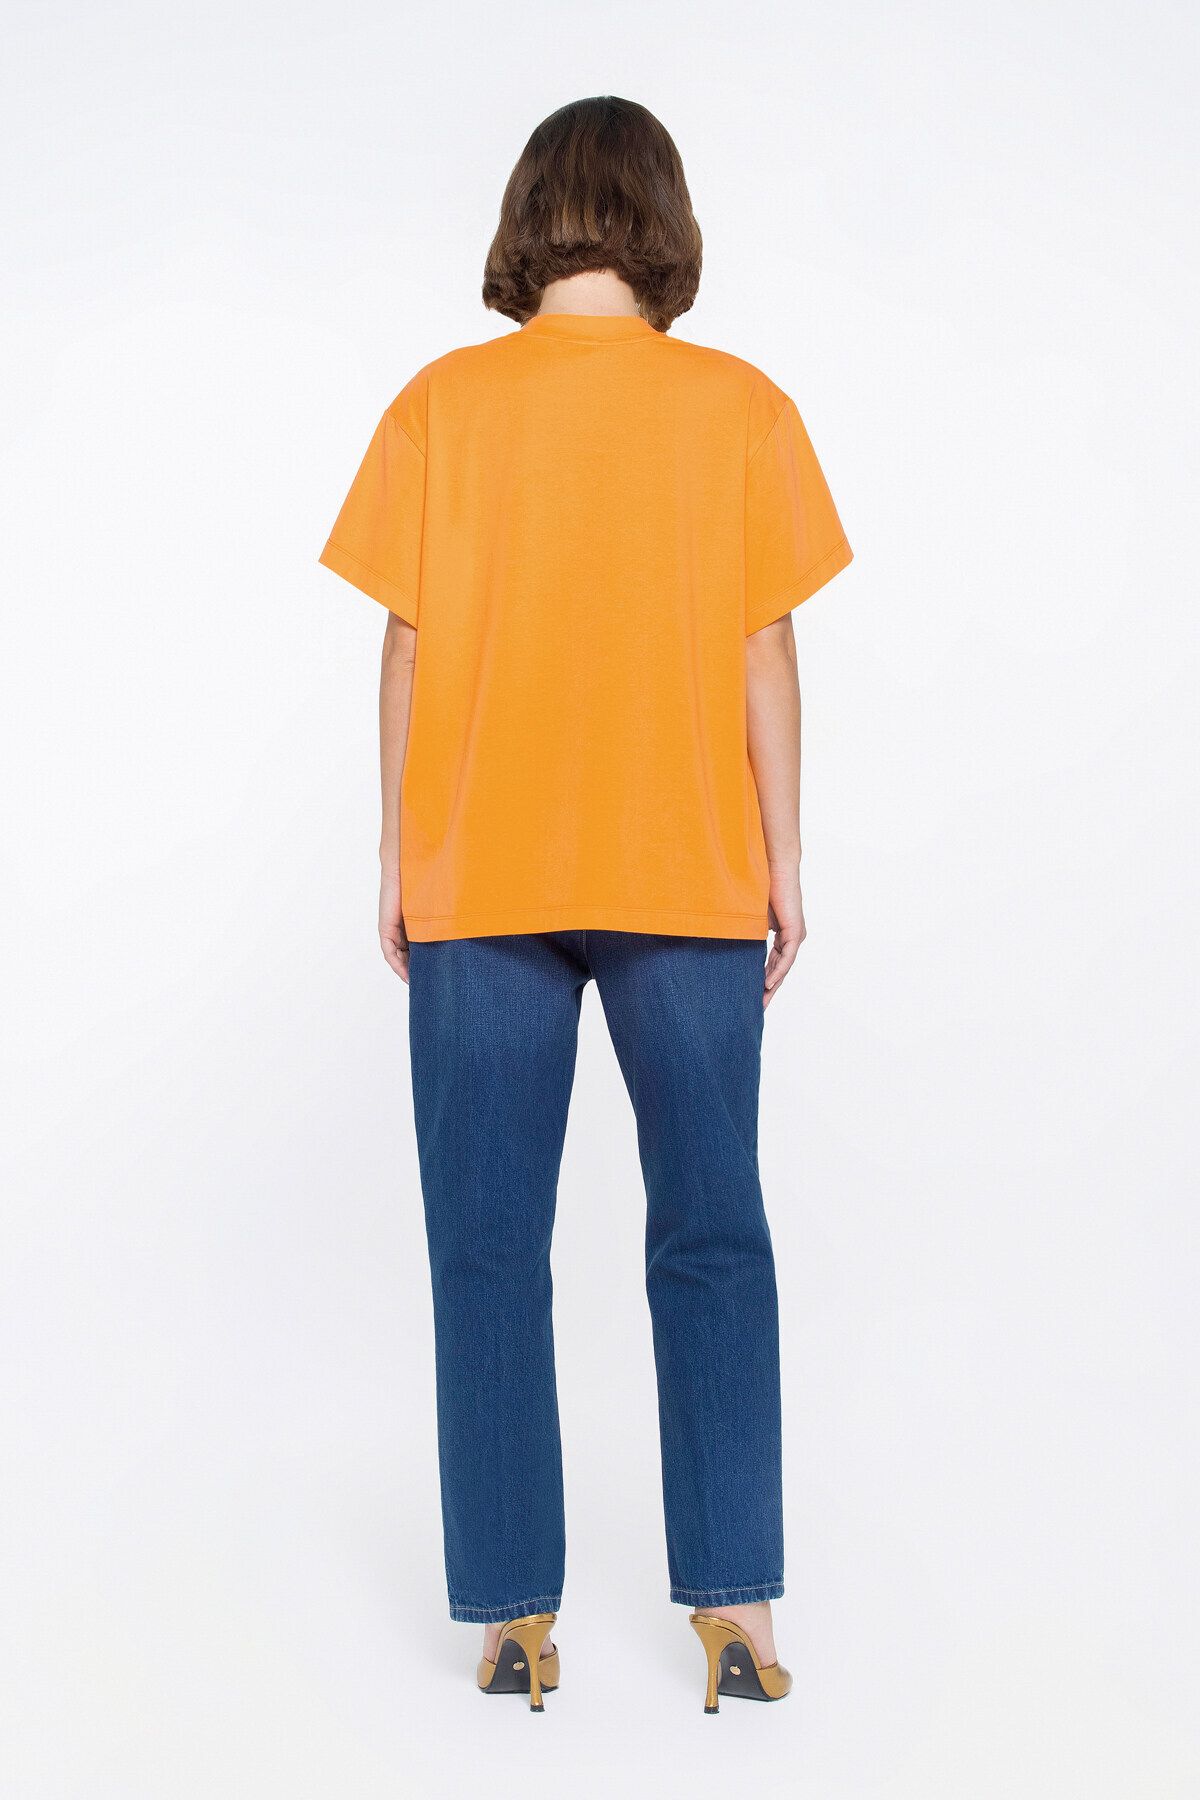 GIZIA تی شرت ساده نارنجی با جزئیات گلدوزی کاربردی